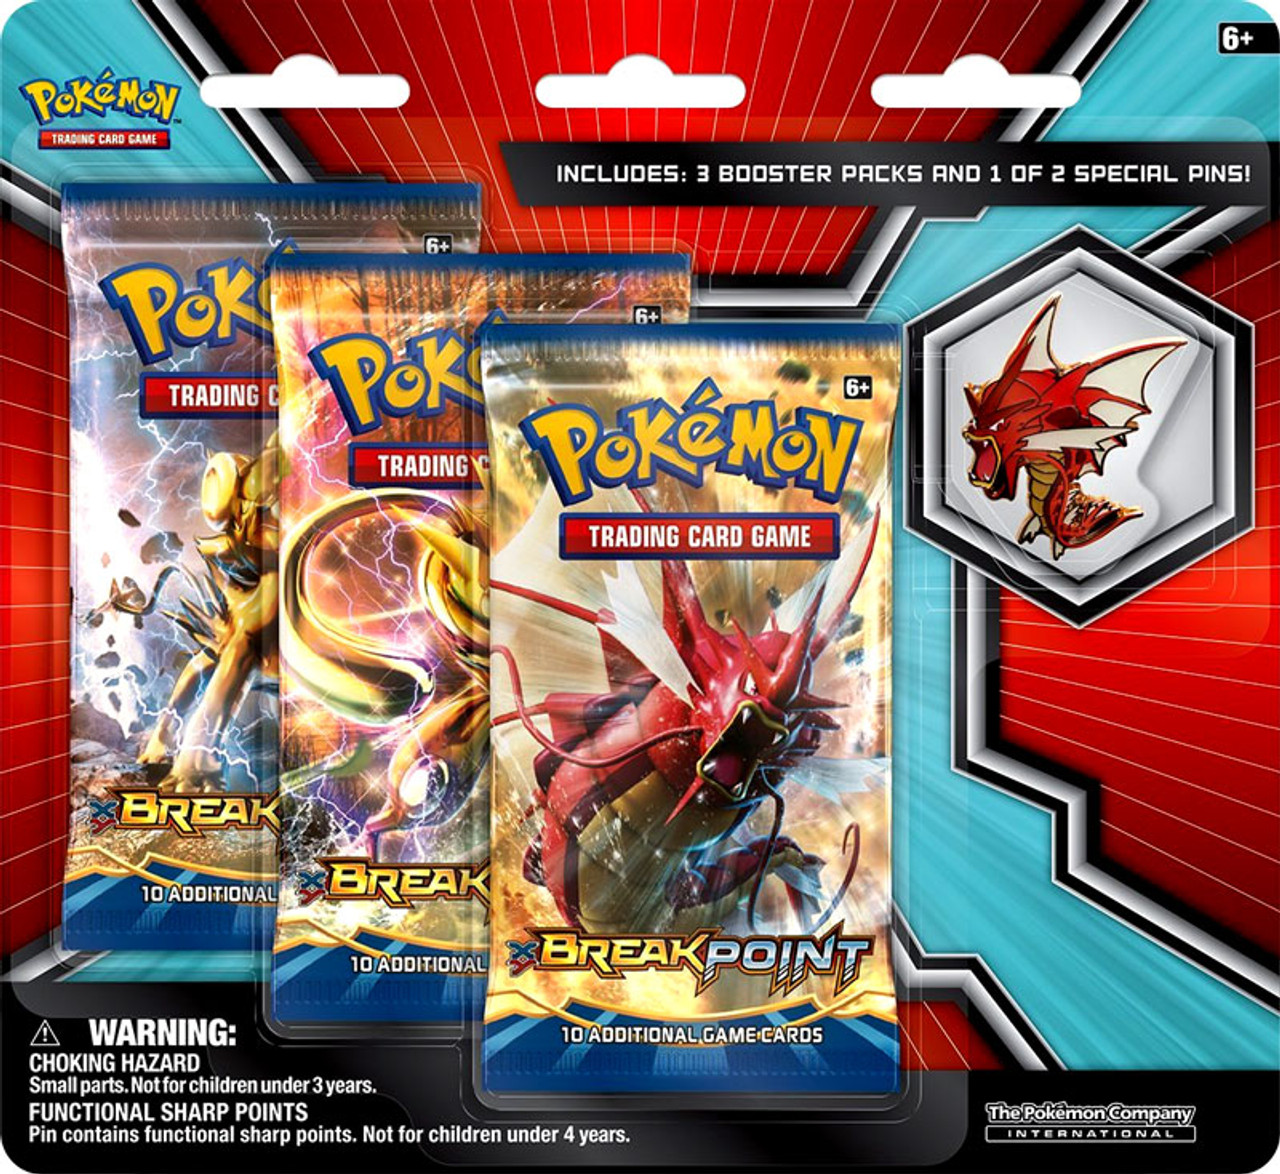 pokemon-mega-shiny-gyarados-pin-pack-pokemon-usa-pre-order-ships-february-8__01073.1461393840.jpg